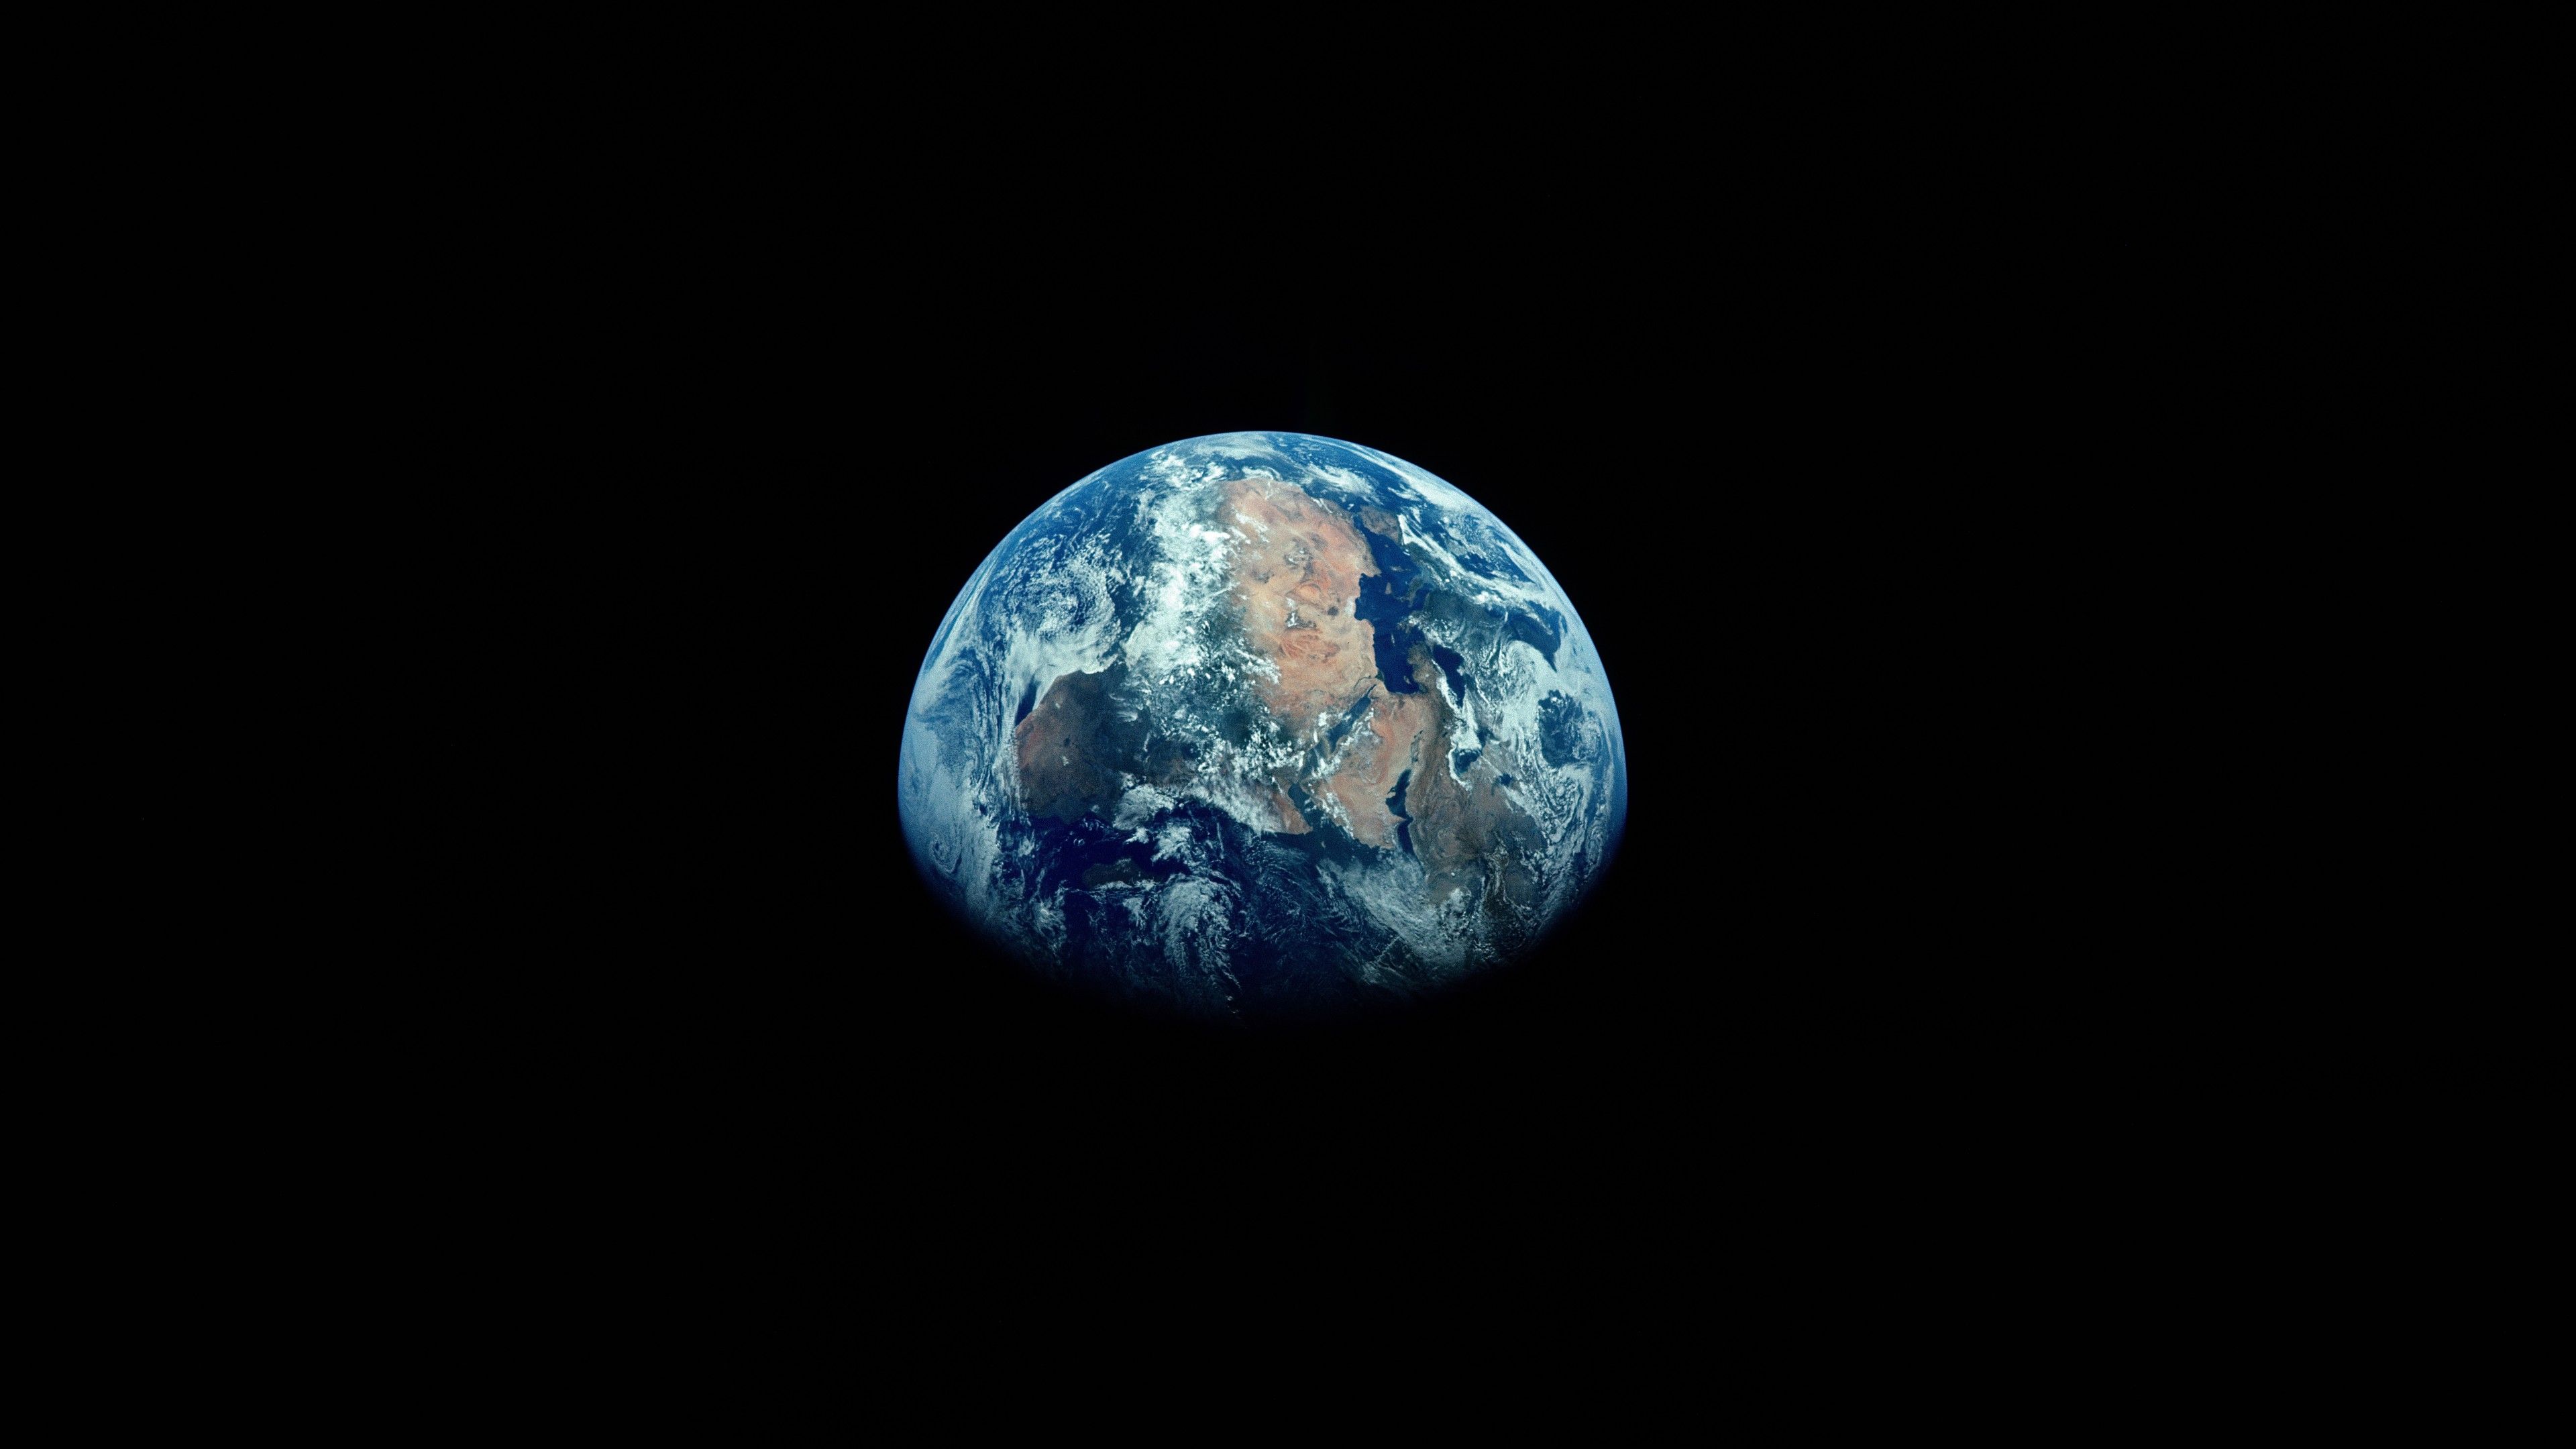 Earth 4K Wallpaper, Space, Black background, Atmosphere, Blue planet, 5K, 8K, Space